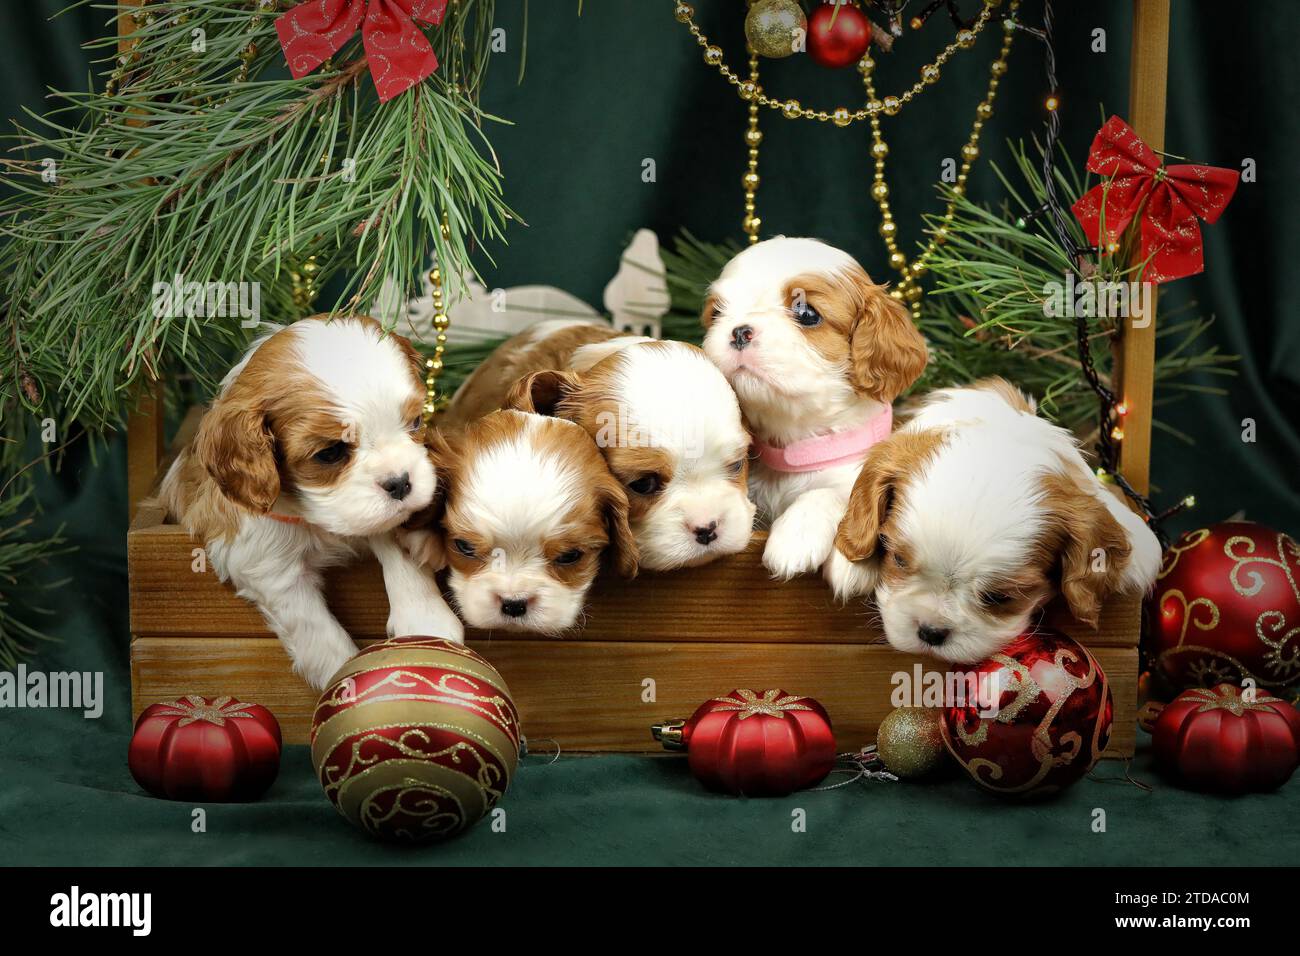 Christmas puppy present Stock Photo by ©Hannamariah 11105970